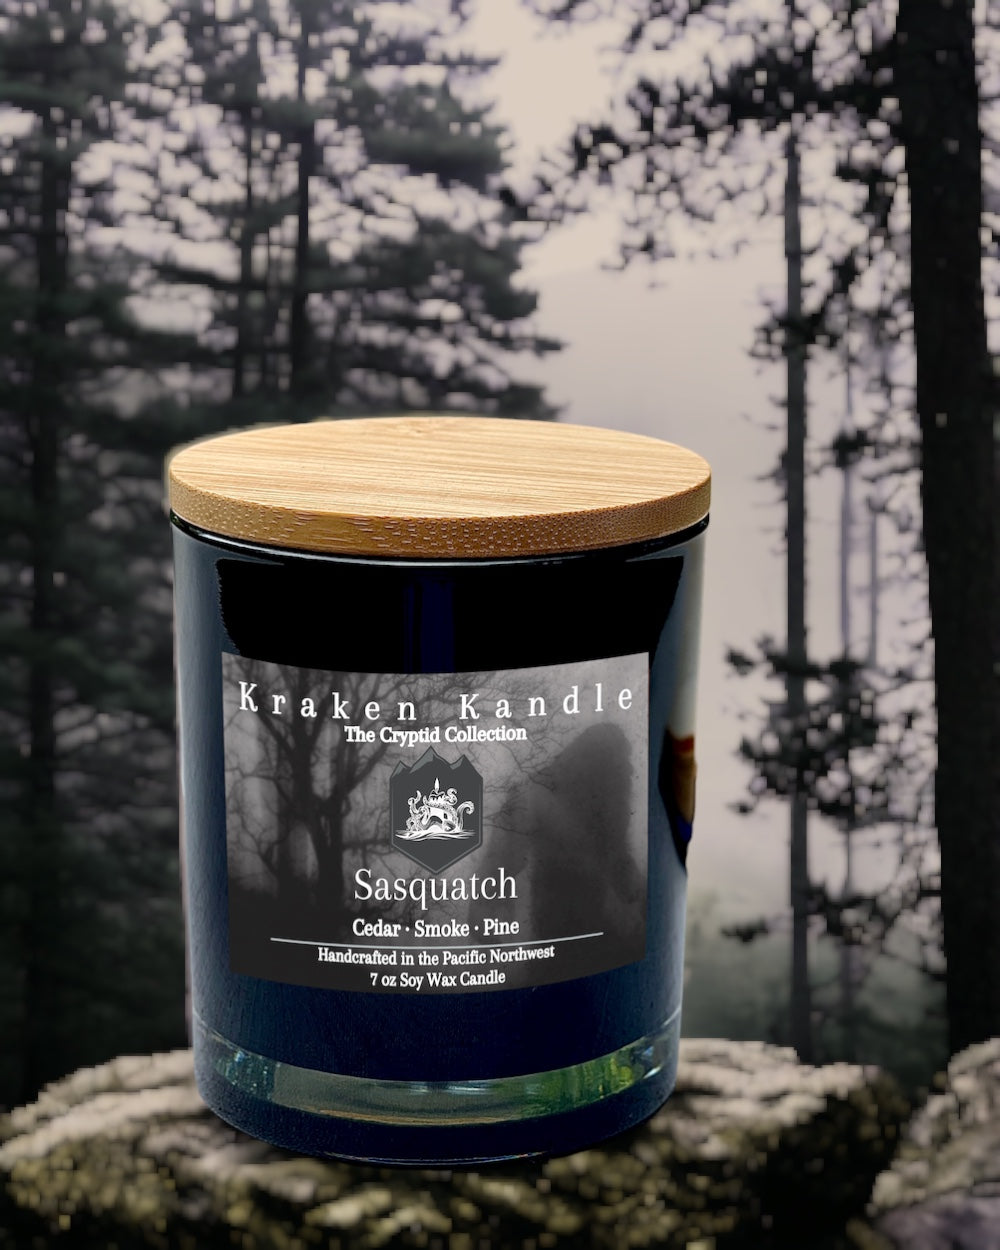 Cedar smoke Pine 2 wick Bigfoot Sasquatch candle 